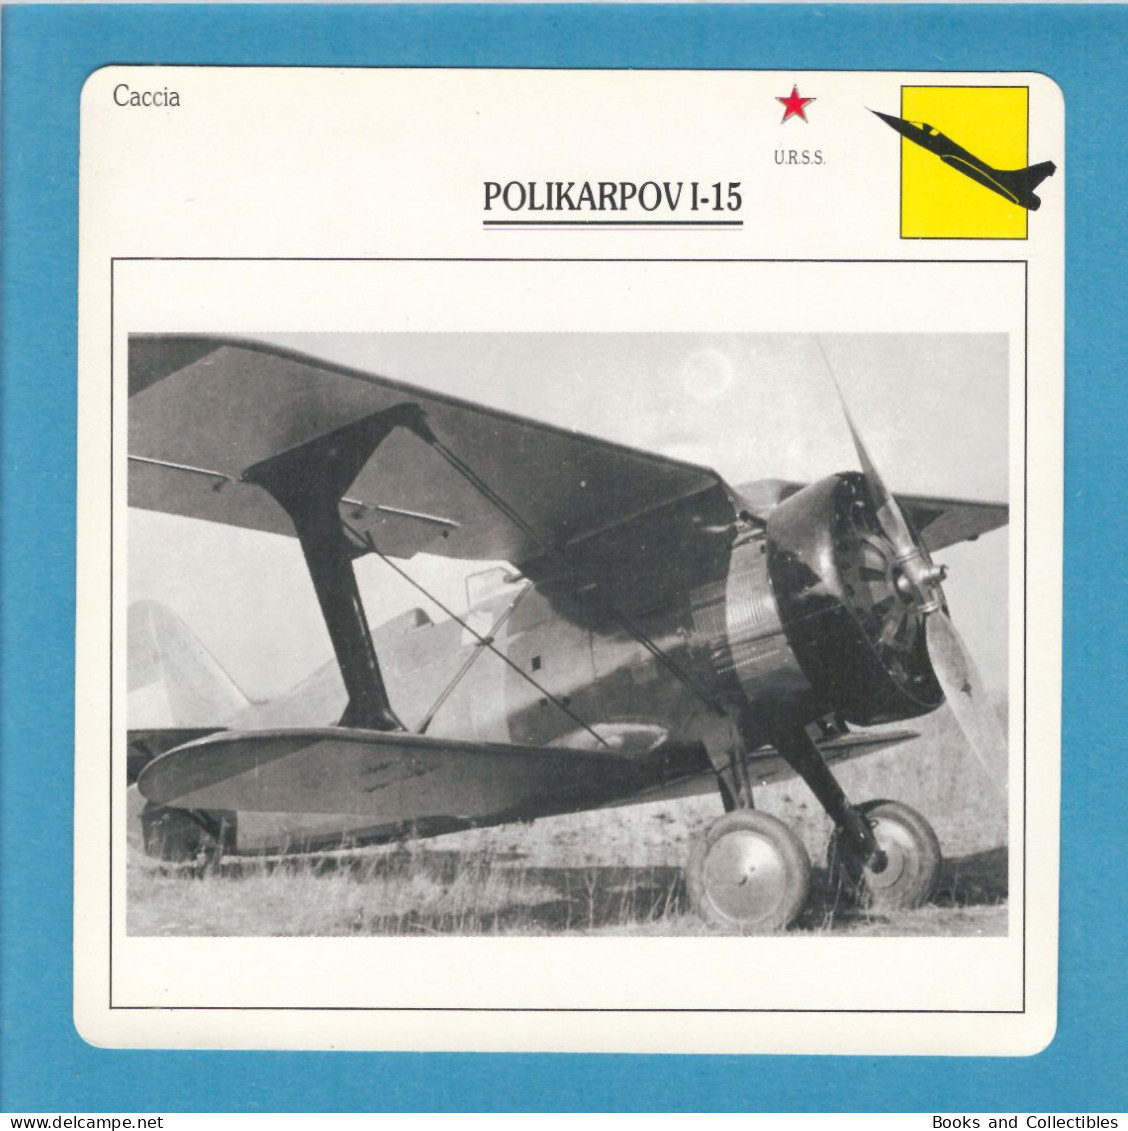 De Agostini Teaching Sheet "Warplanes" / POLIKARPOV I-15 (U.S.S.R.) - Aviation